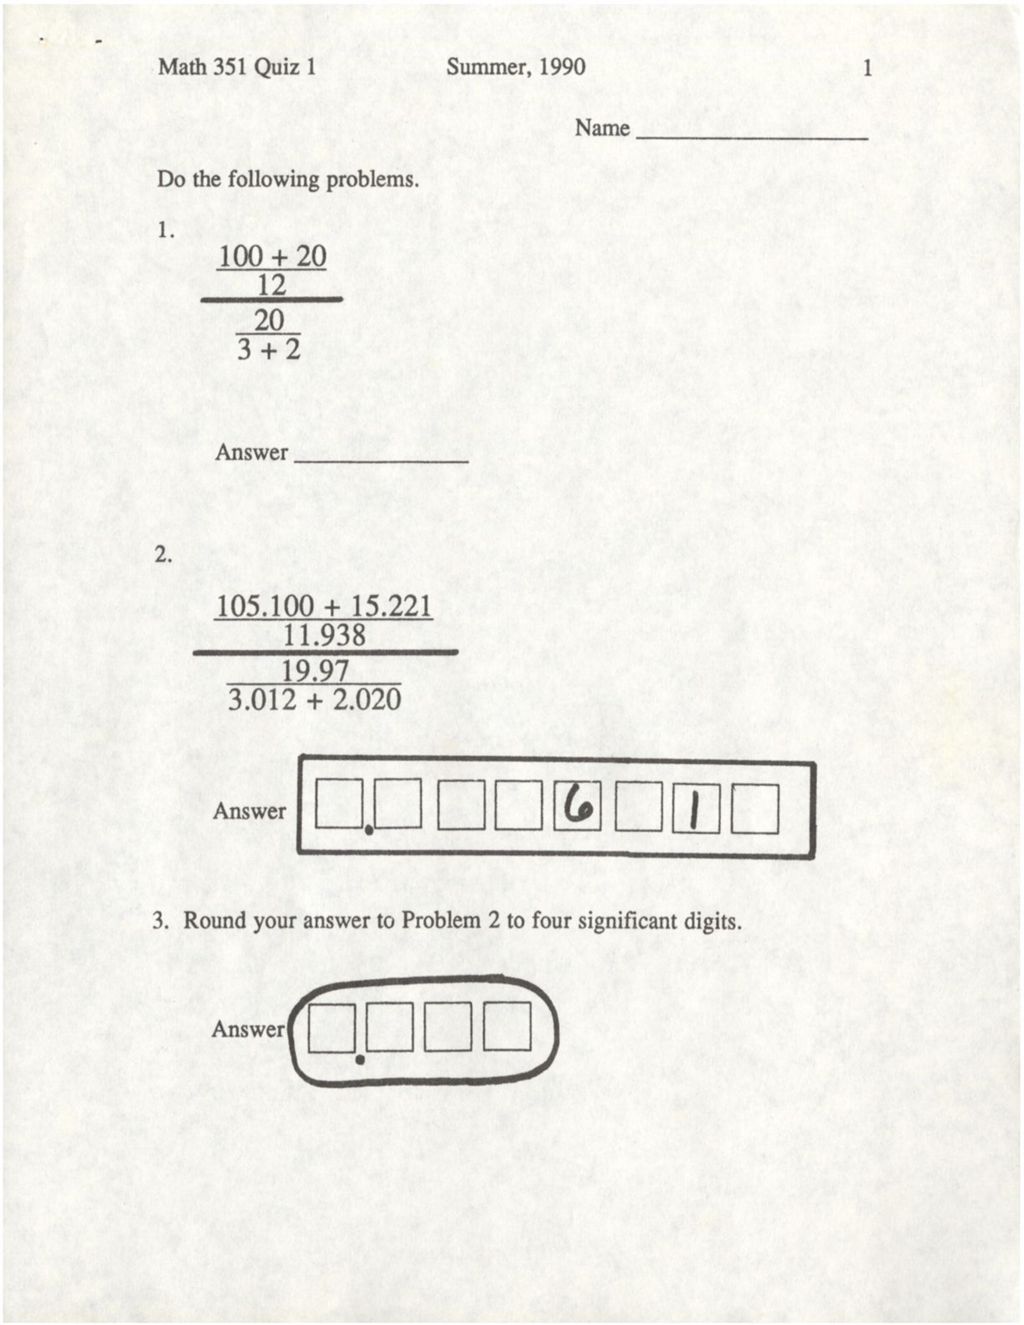 Miniature of Math 351 Quiz 1 (1990)